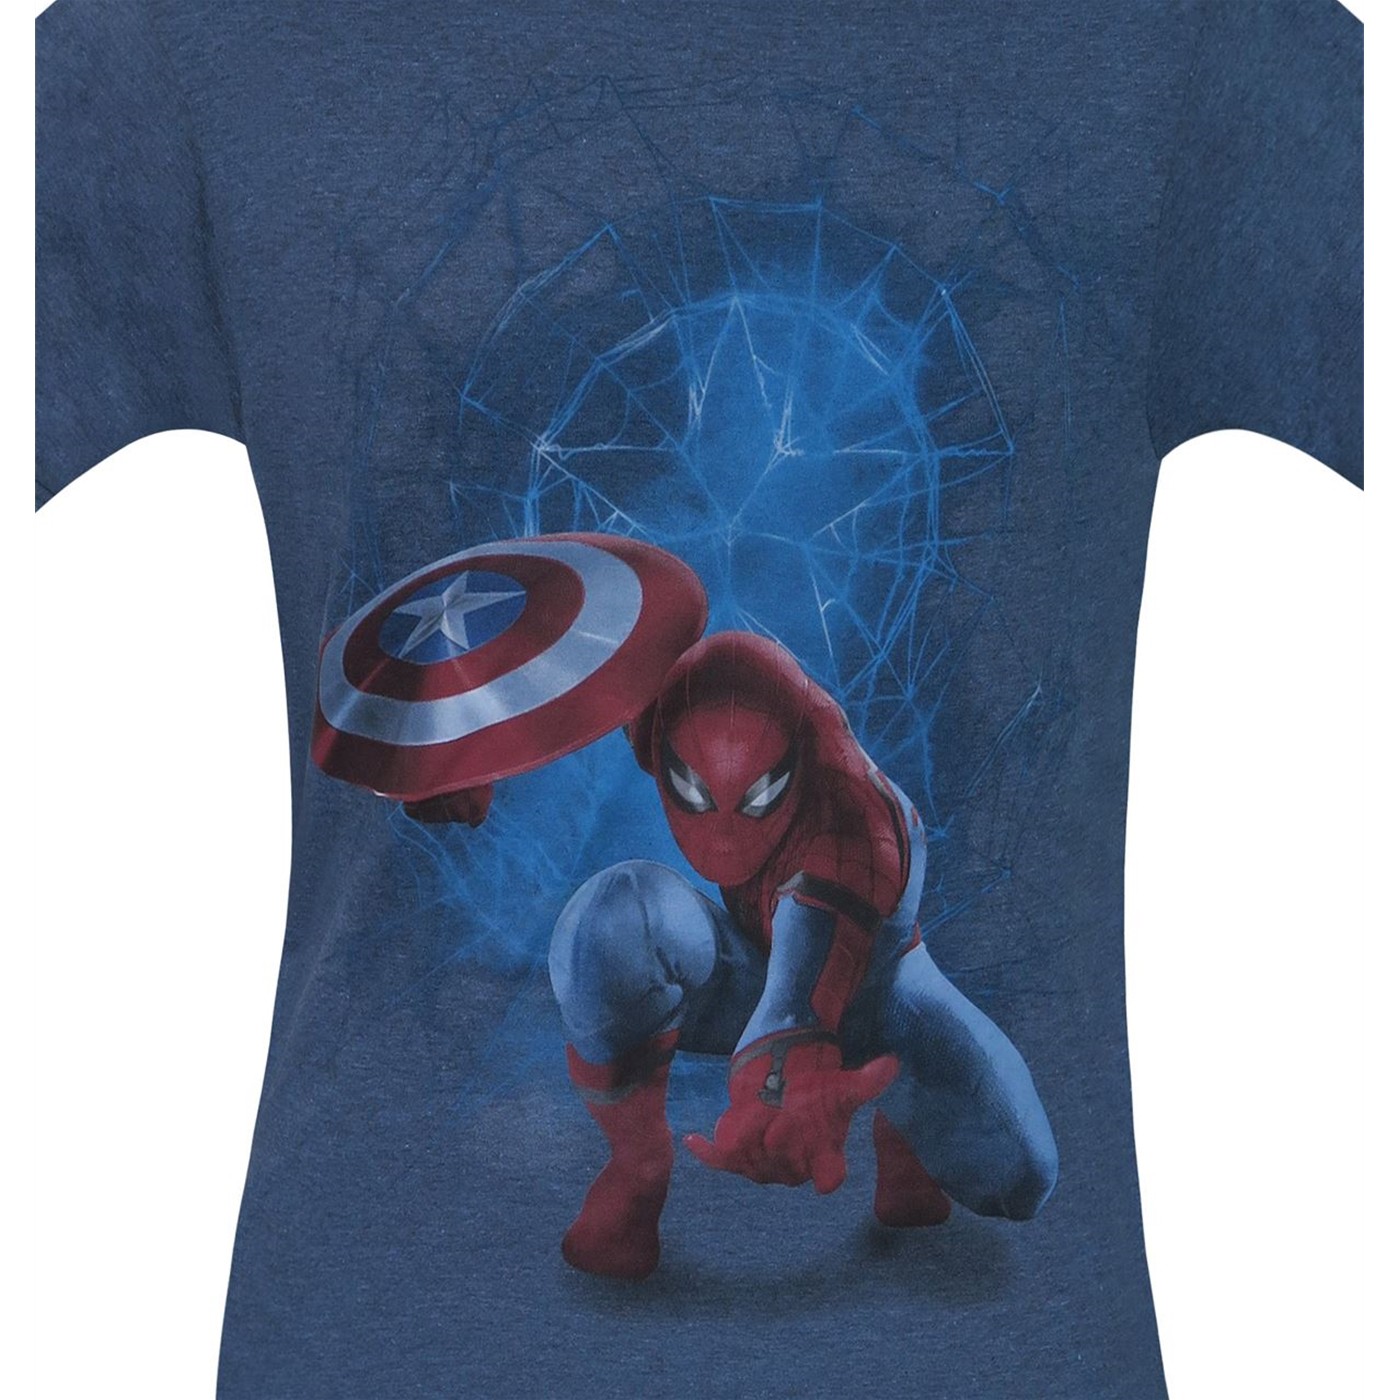 Spiderman with Captain's Shield Men's T-Shirt